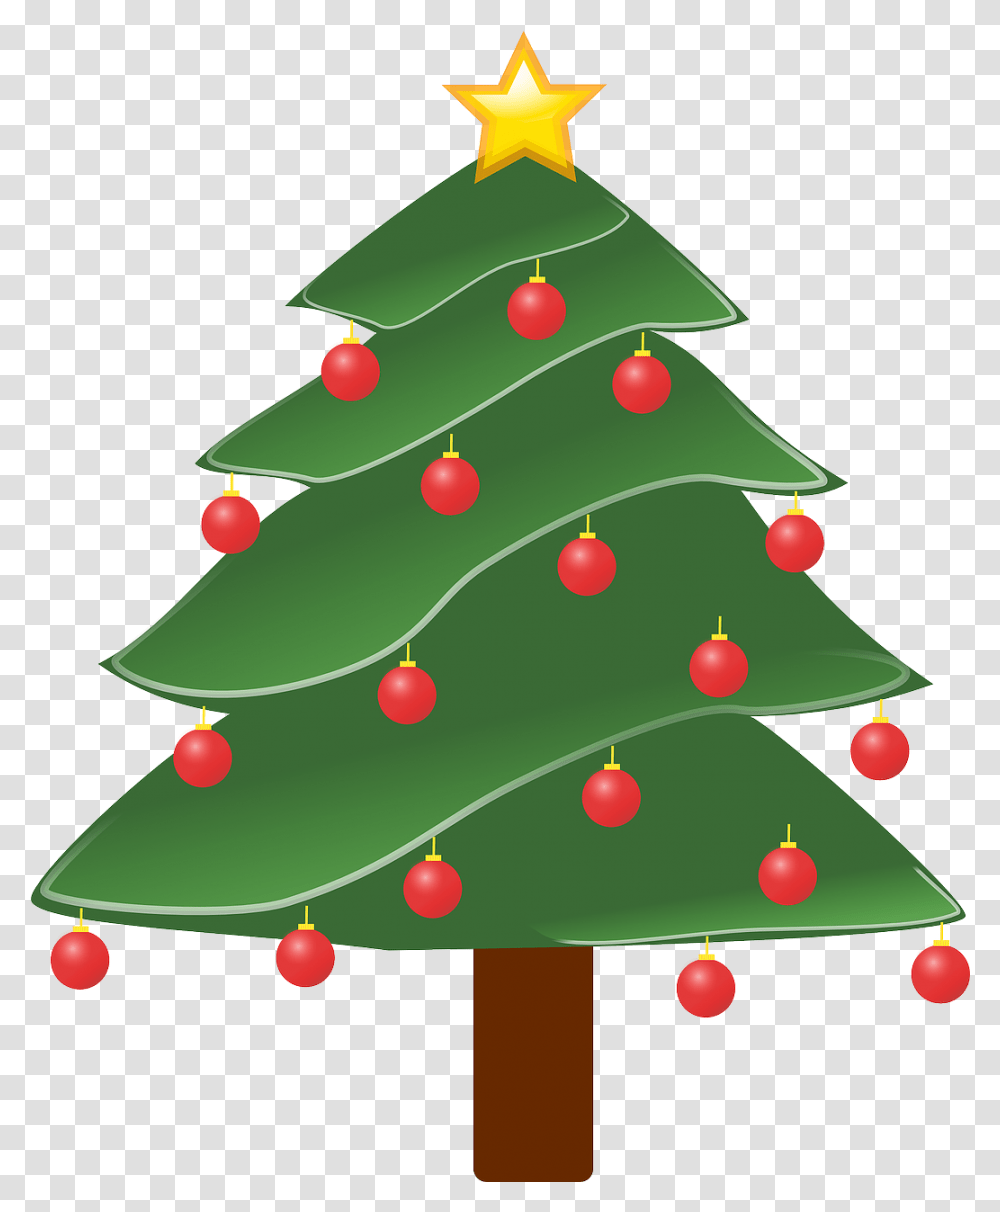 Free Christmas Tree Clip Art Background Pine Tree Clip Art, Plant, Ornament, Star Symbol Transparent Png